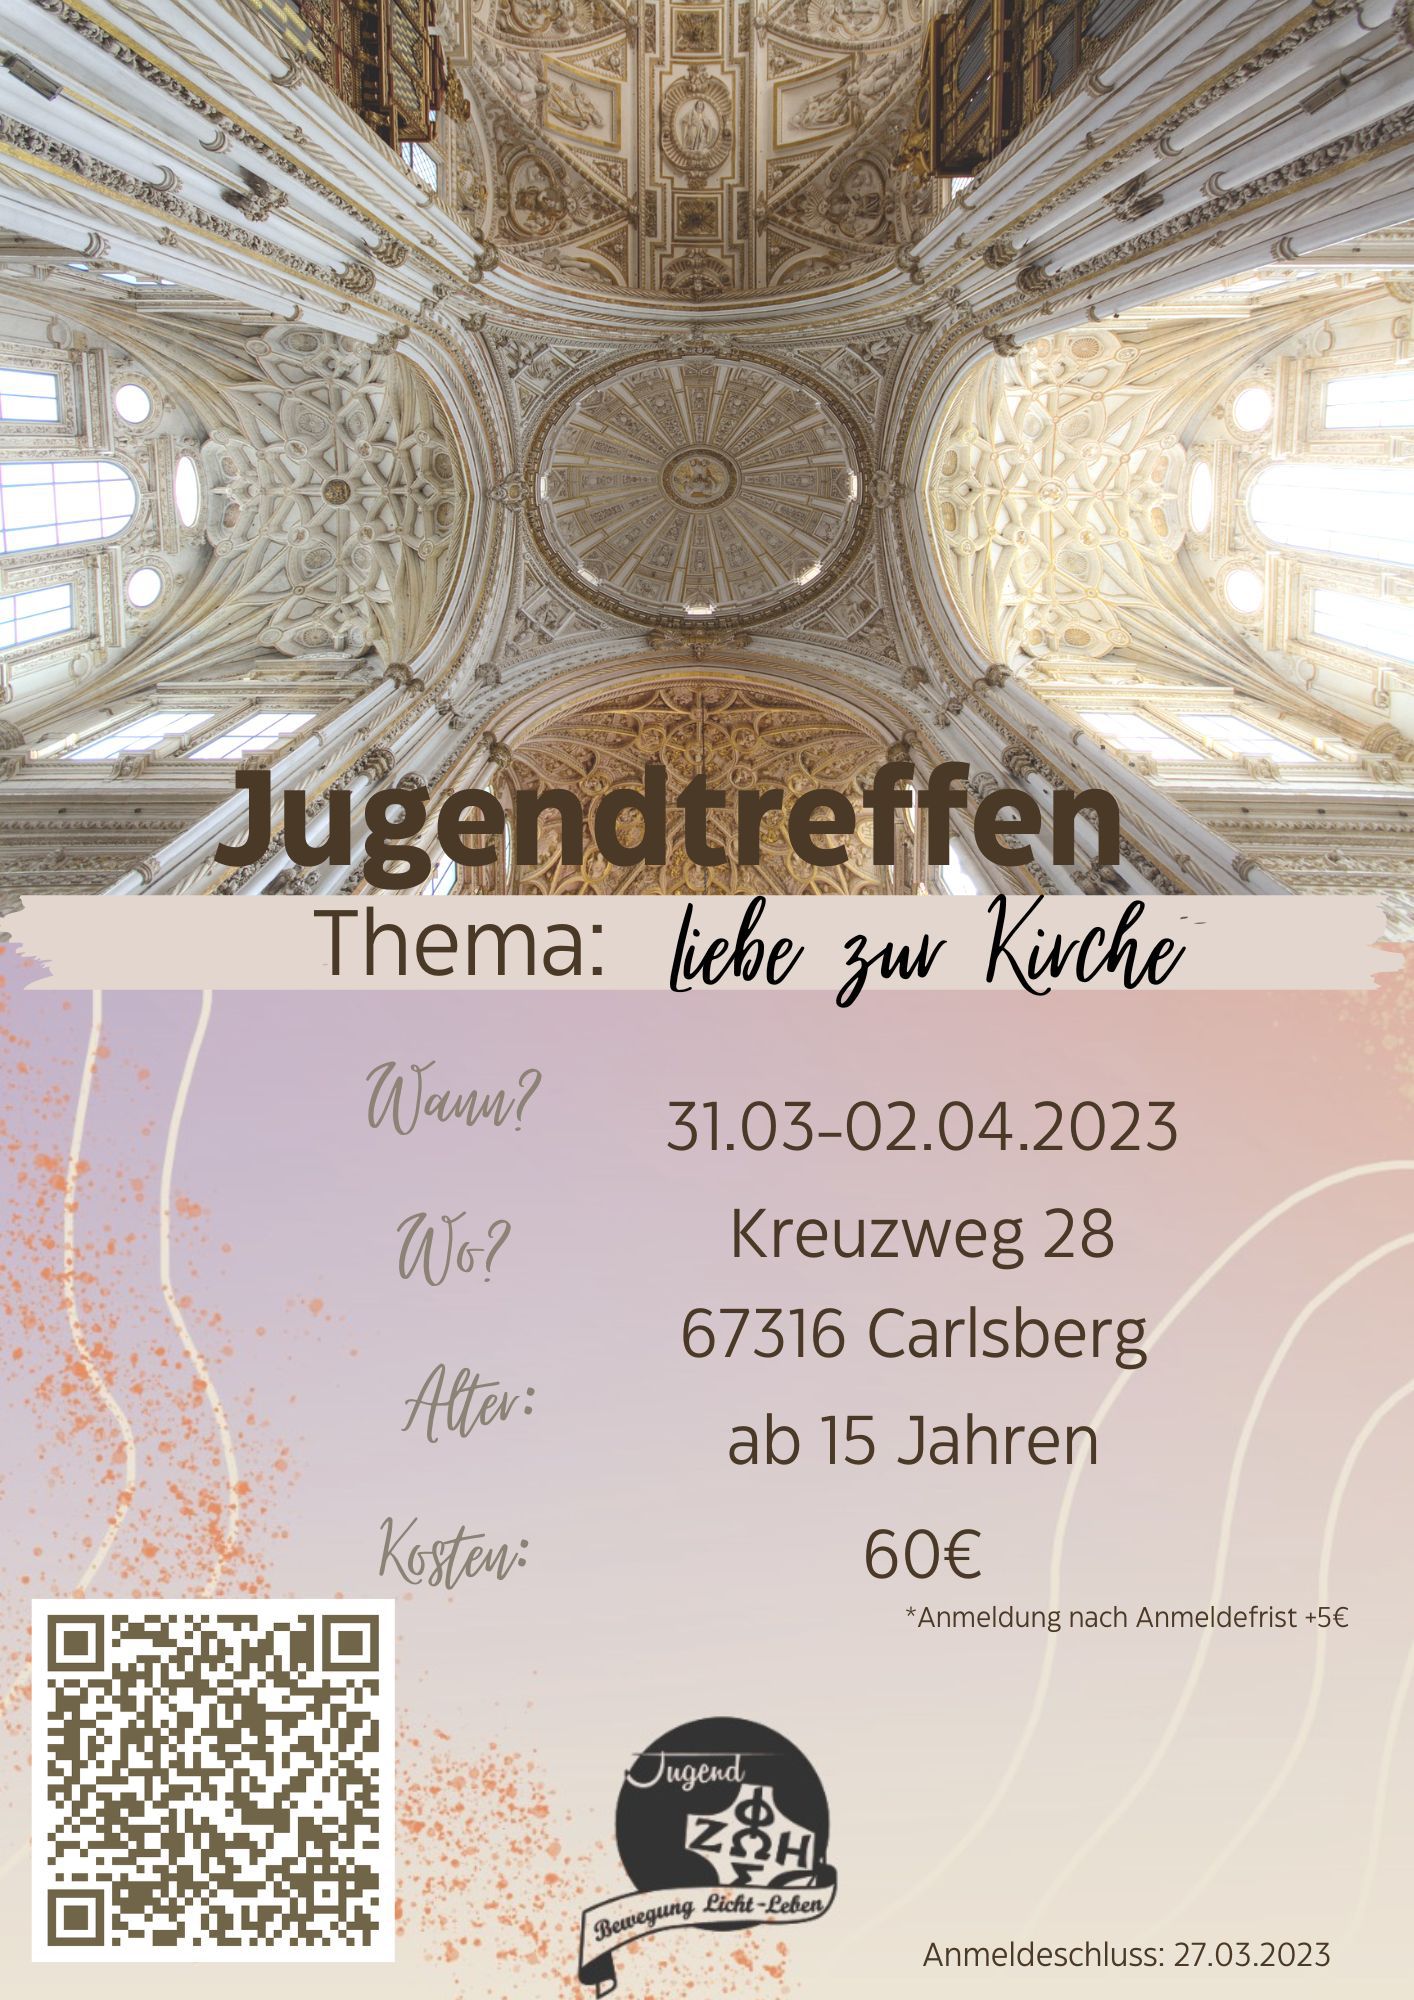 Jugendtreffen in Carlsberg (31.03-02.04.2023)